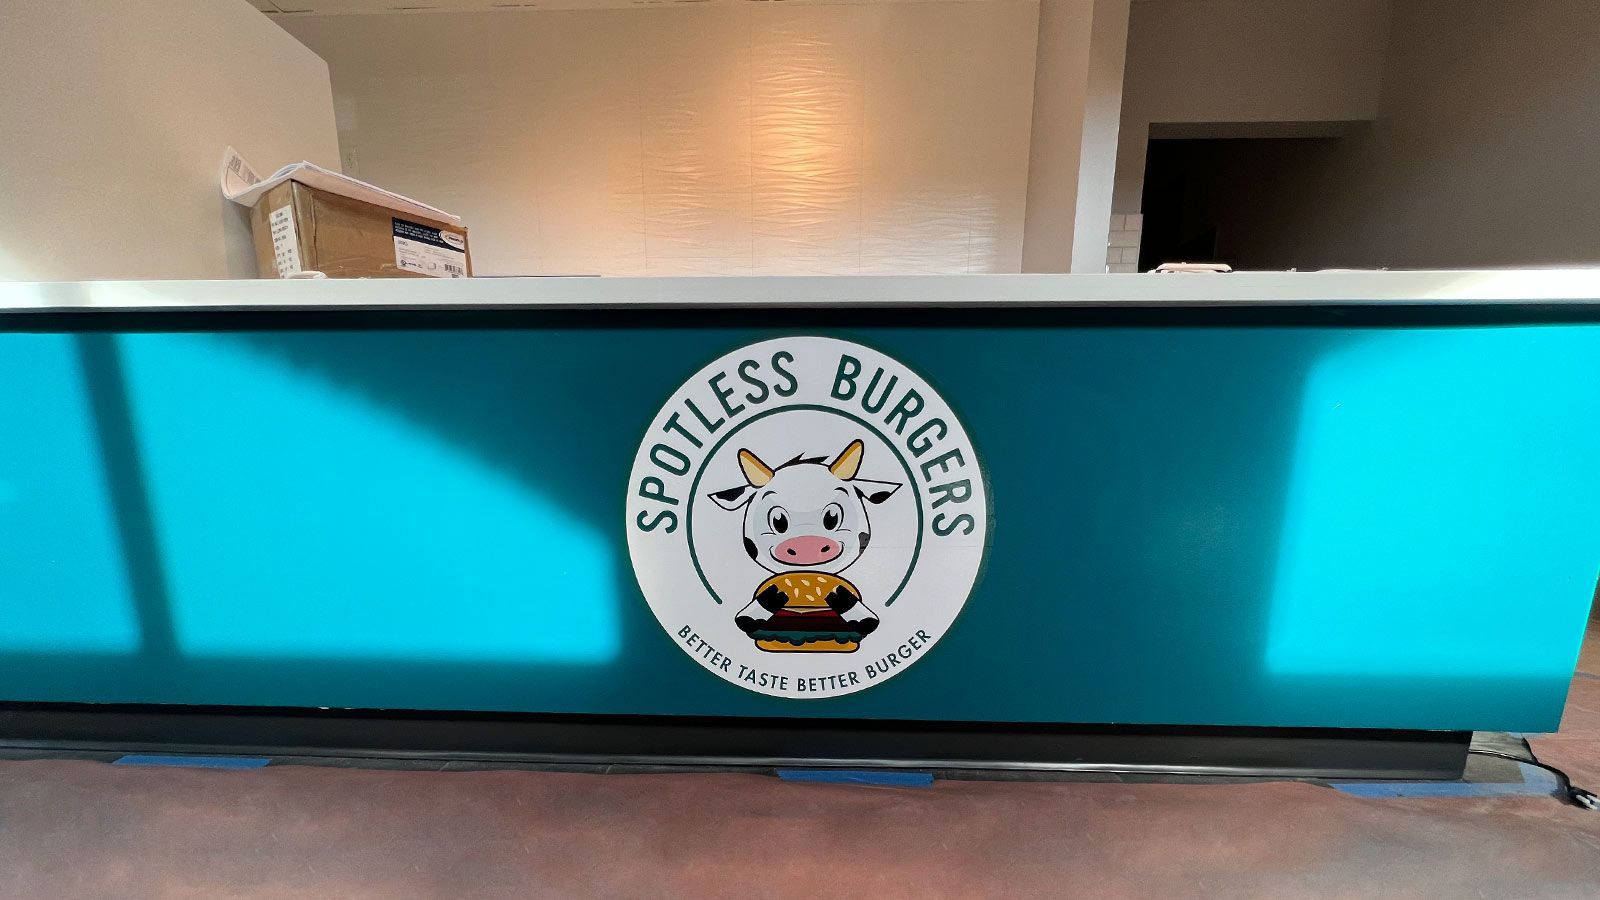 Spotless Burgers interior sign